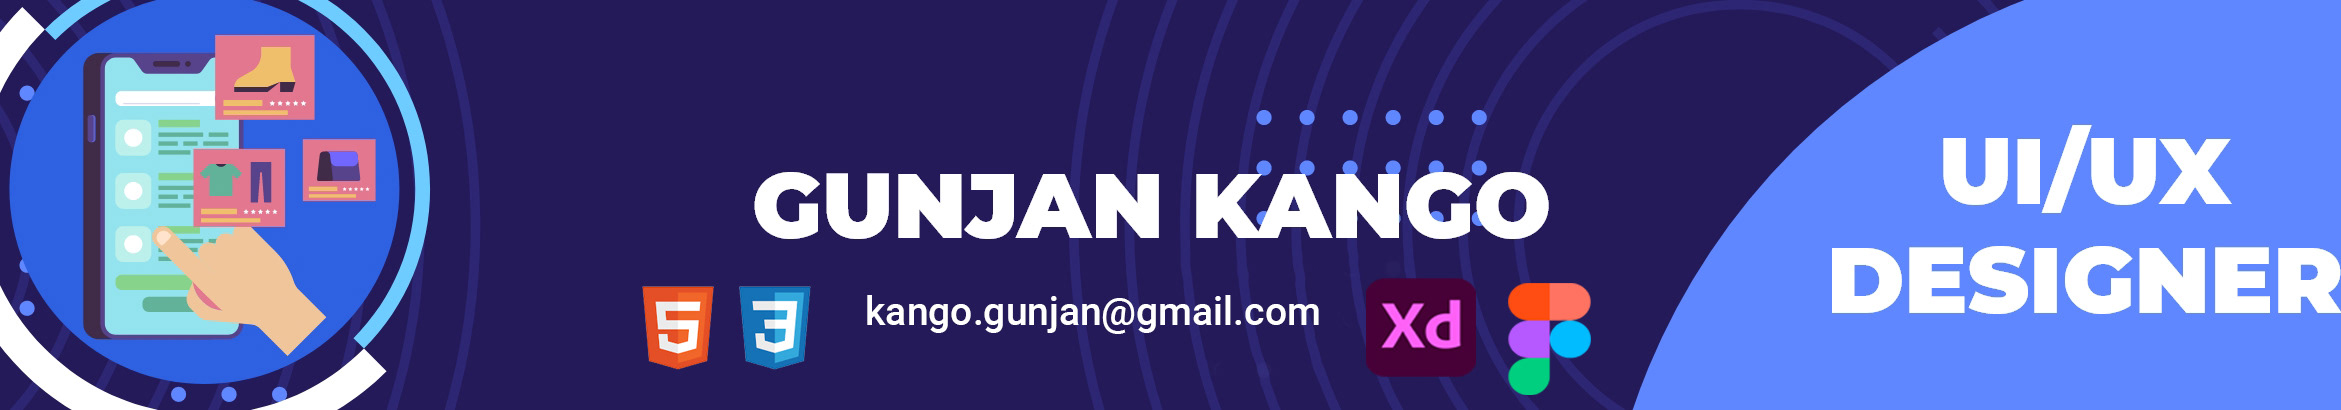 Baner profilu użytkownika Gunjan kango